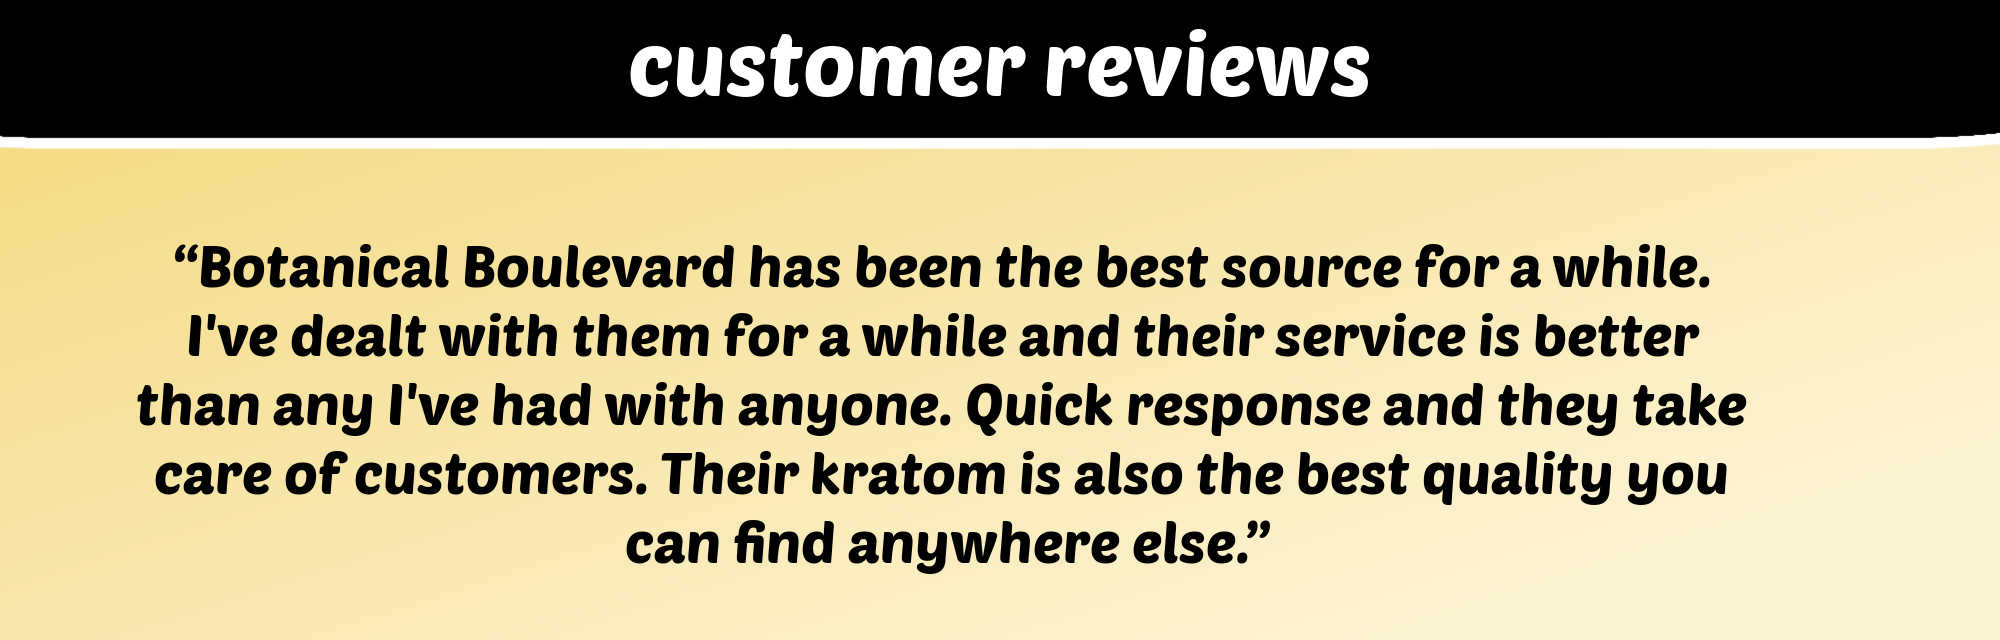 image of botanical boulevard customer reviews